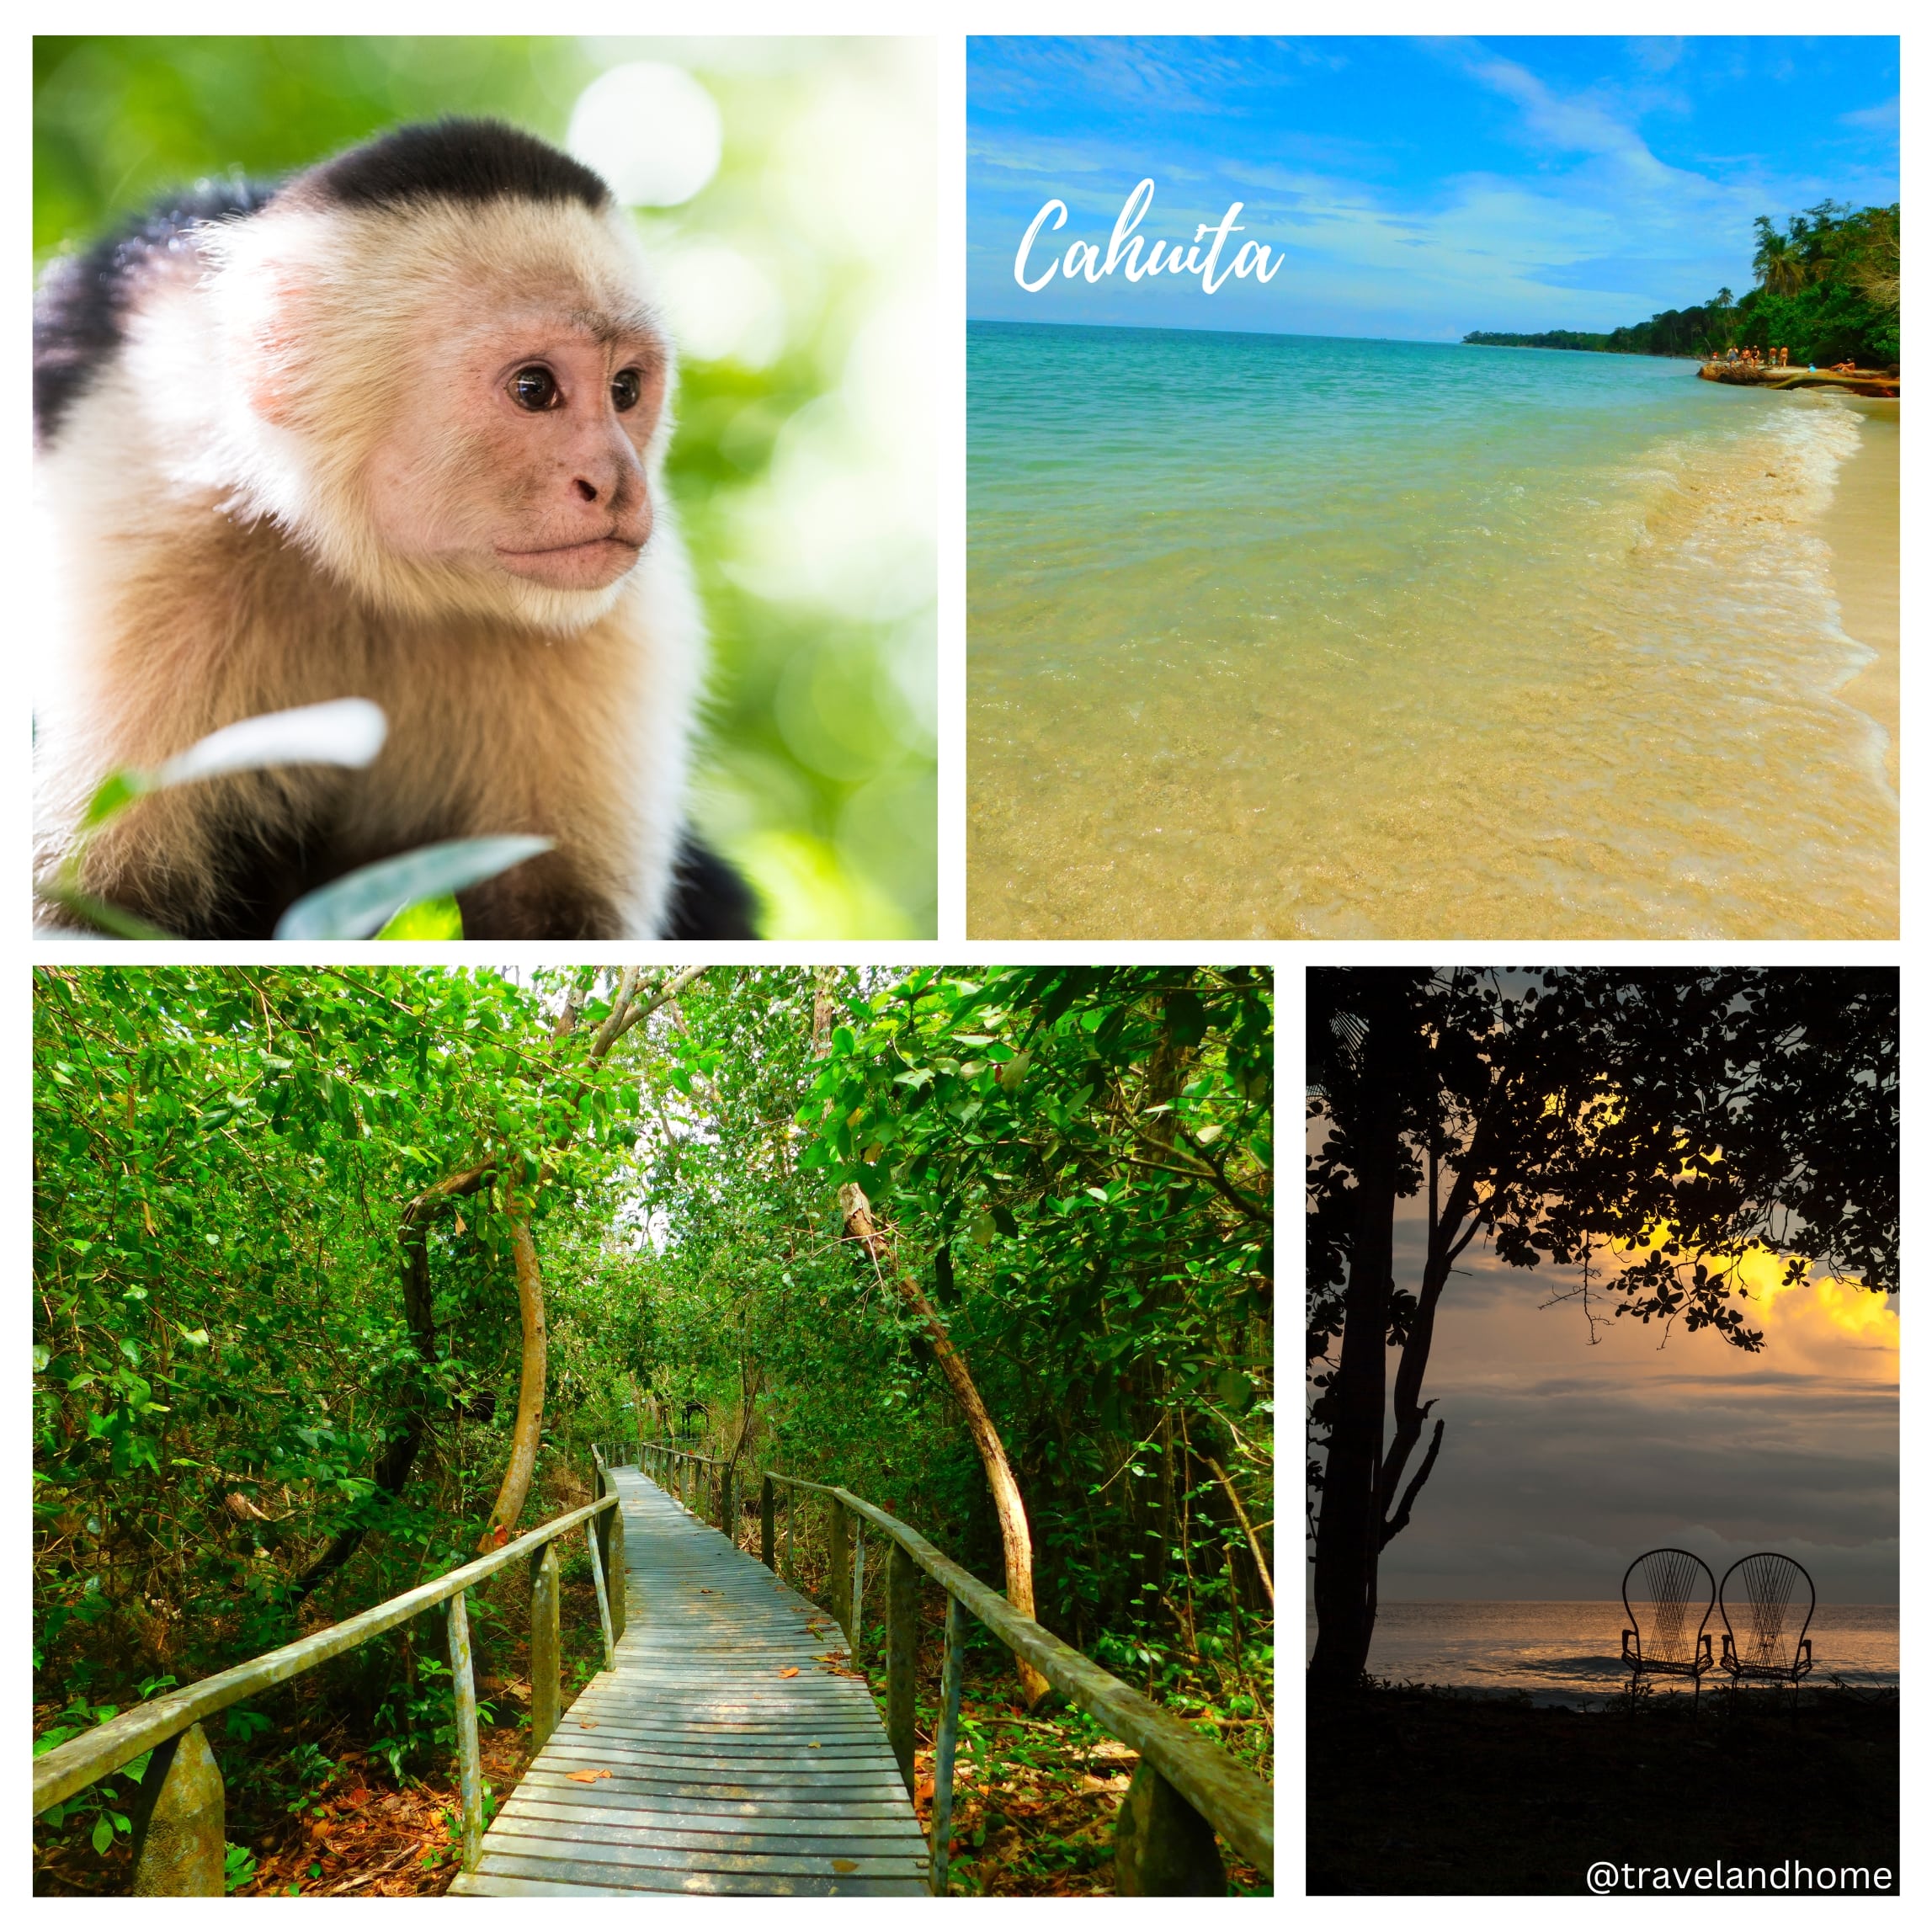 Limon Caribbean coast Costa Rica travelandhome reis en huis travel and home rainforests beautiful beaches heritage min